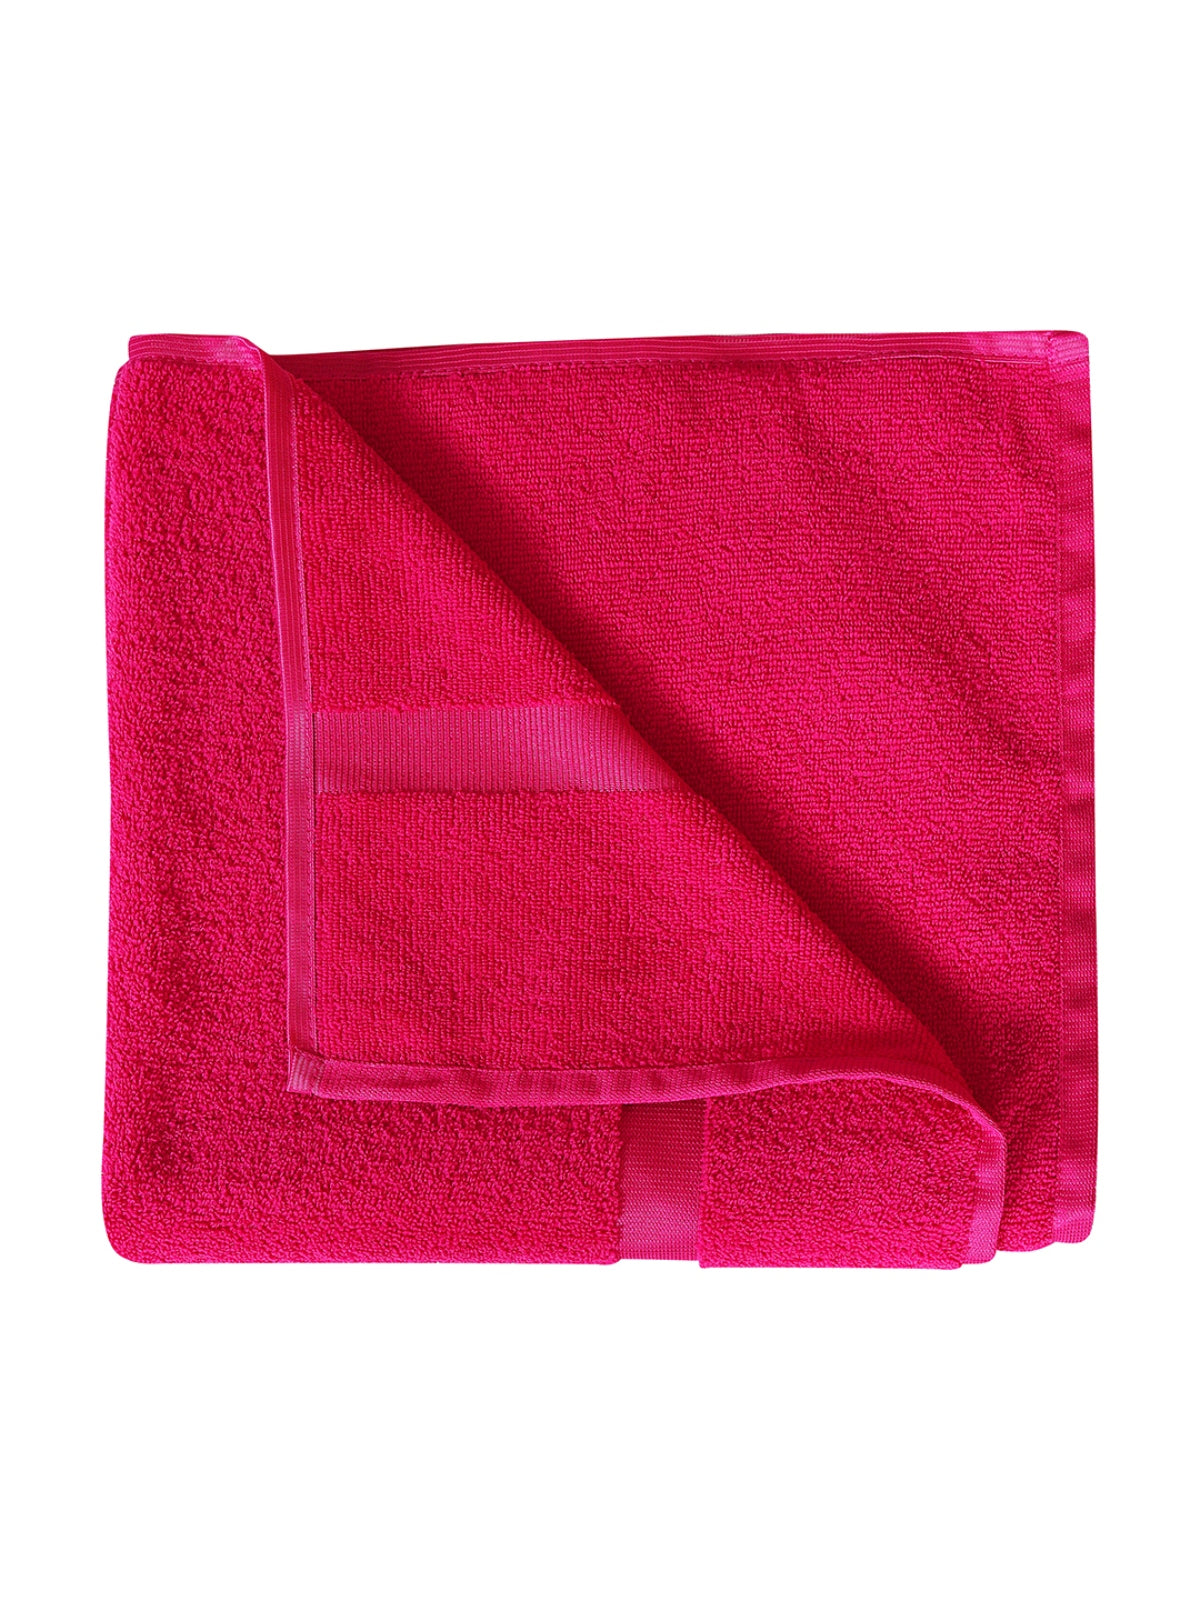 Pink Solid Patterned Microfiber Towel